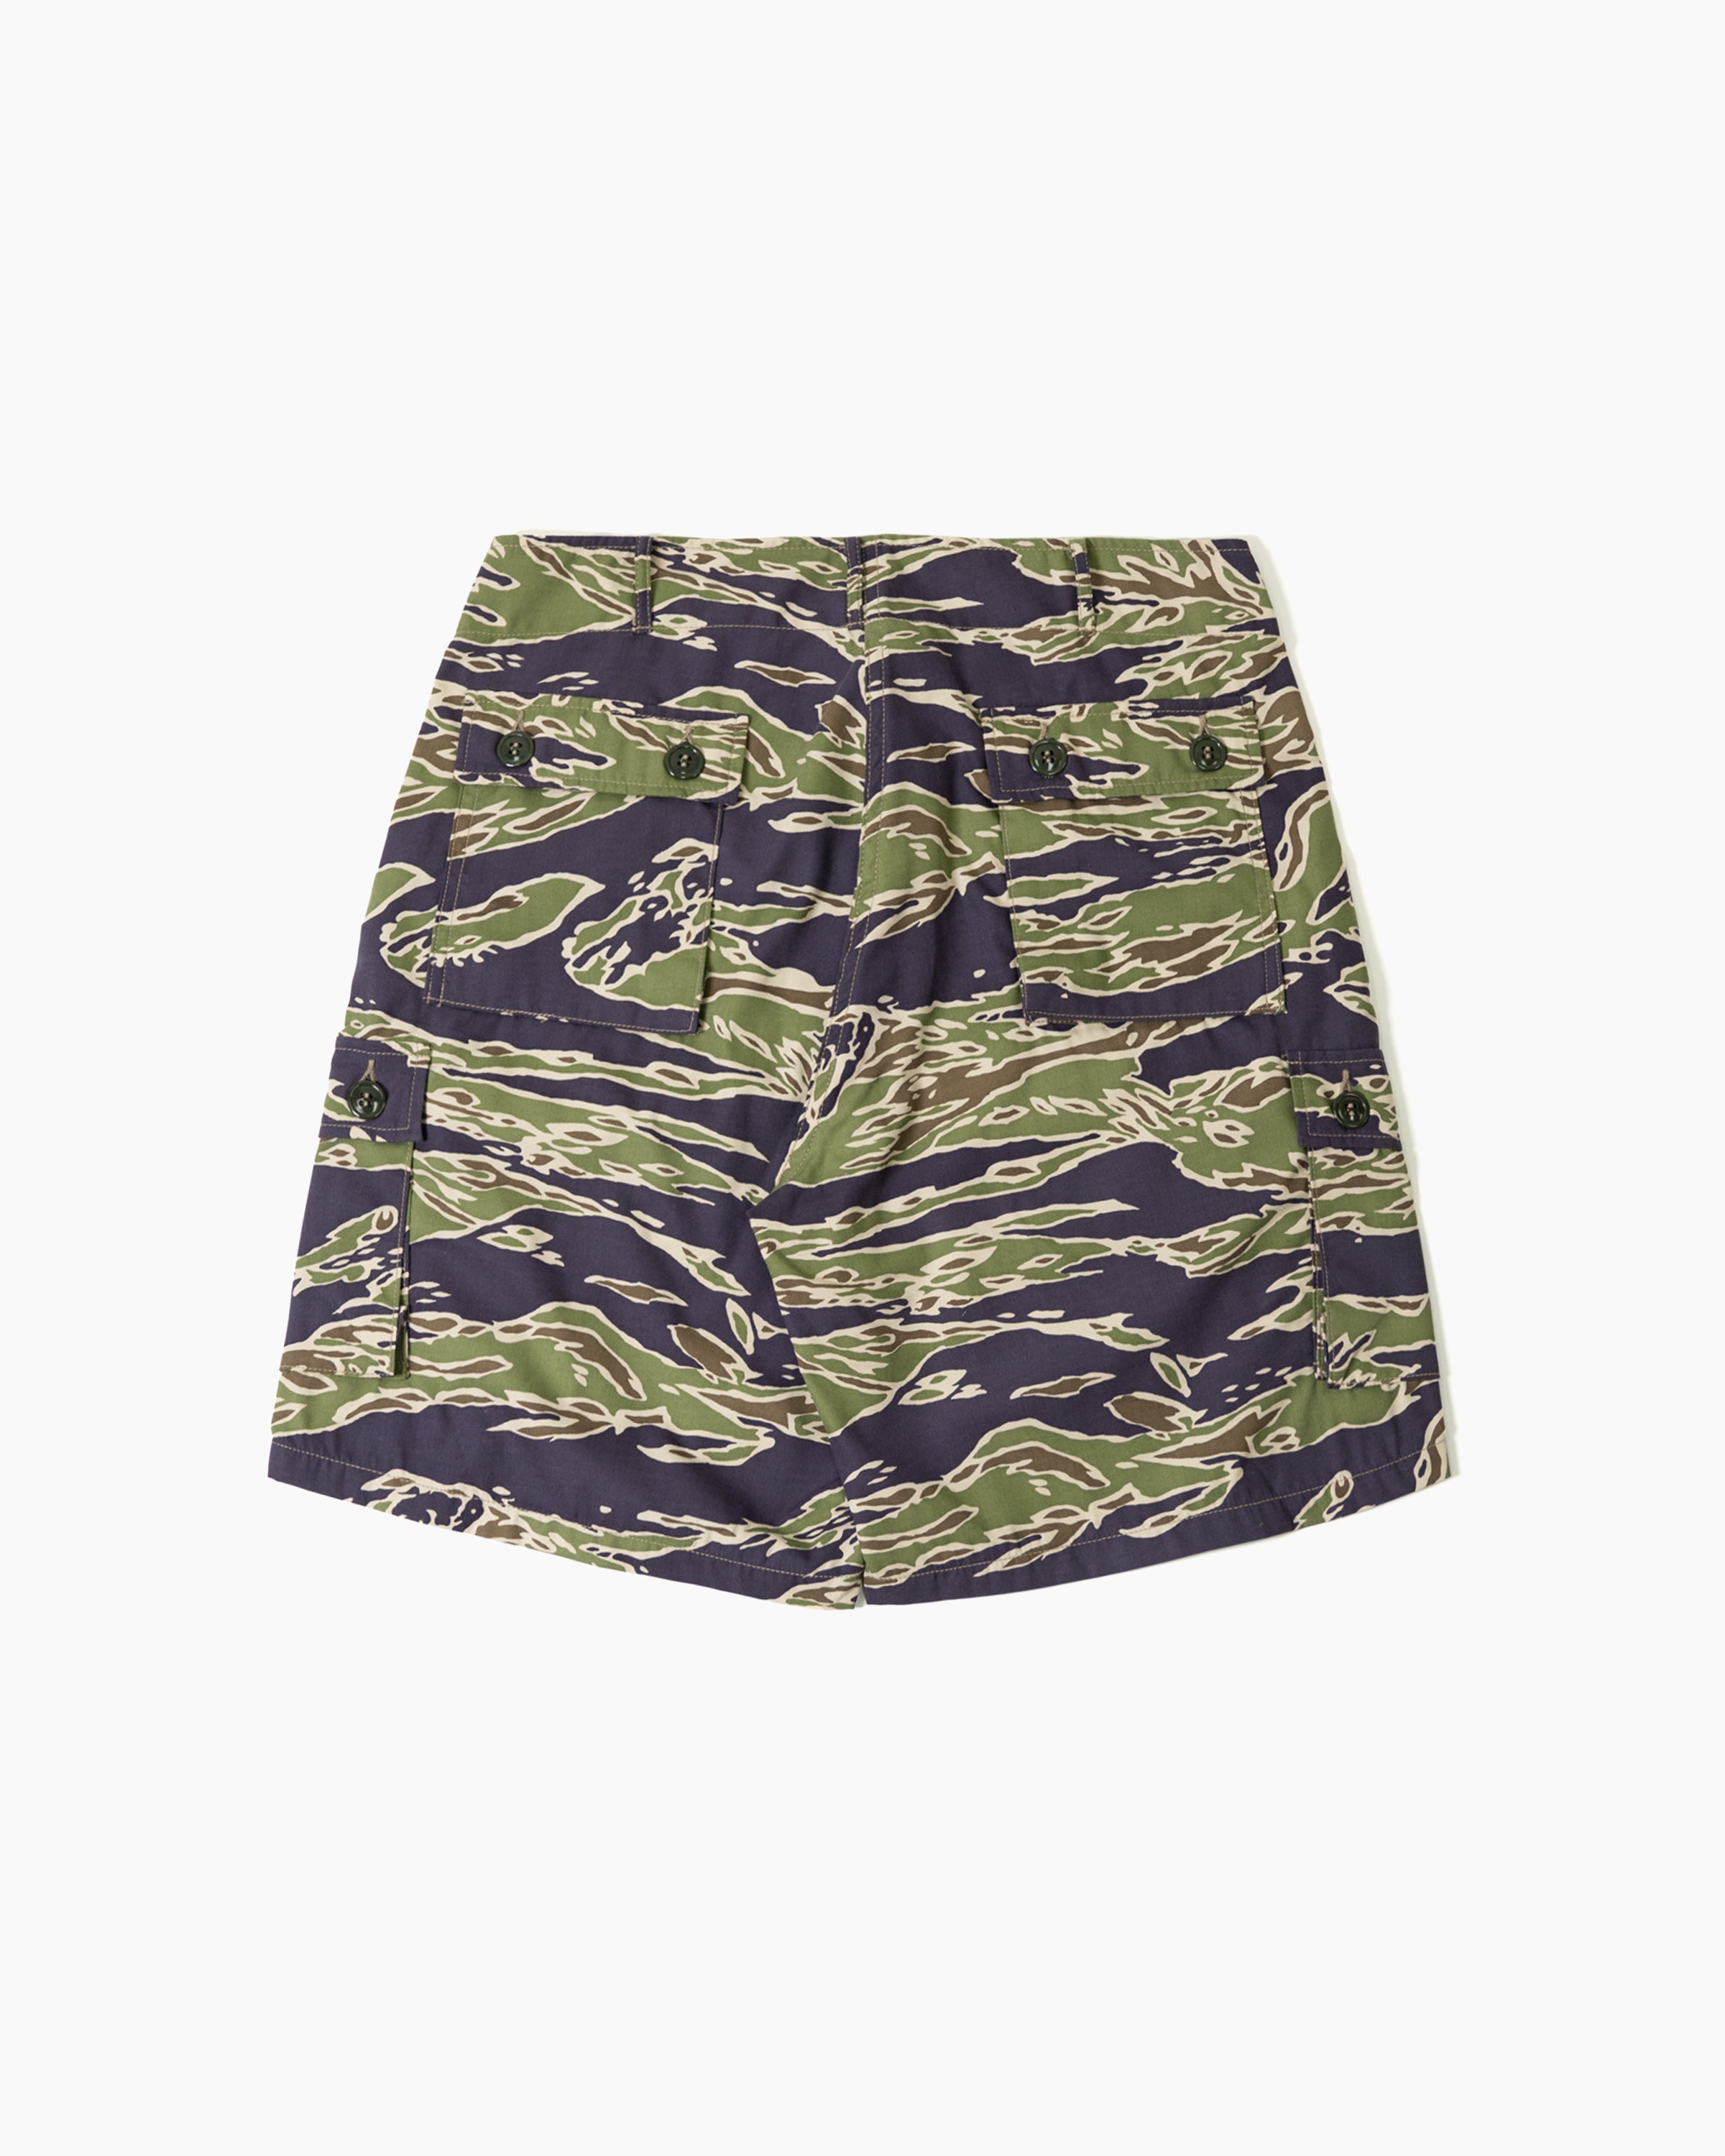 Tiger Camouflage Civilian Shorts/ Late War MP23005 | Green